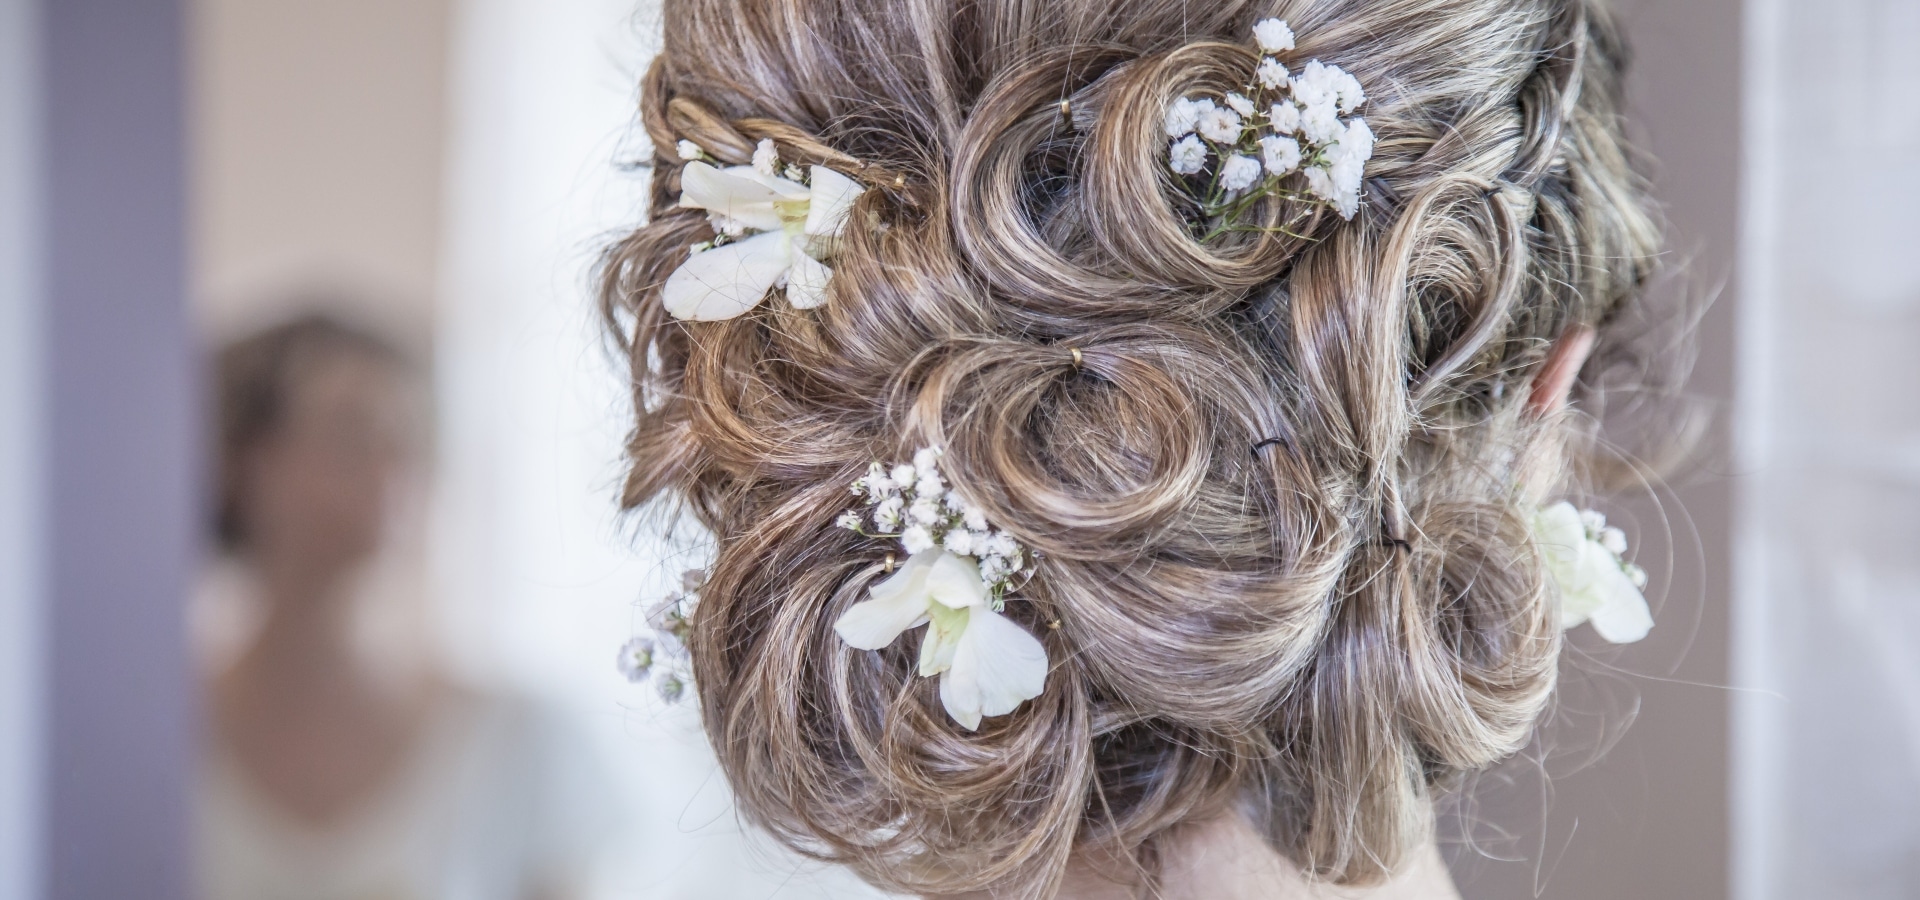 Wedding Hairstyles That Look Great on Thin Hair · BelFiore Studio